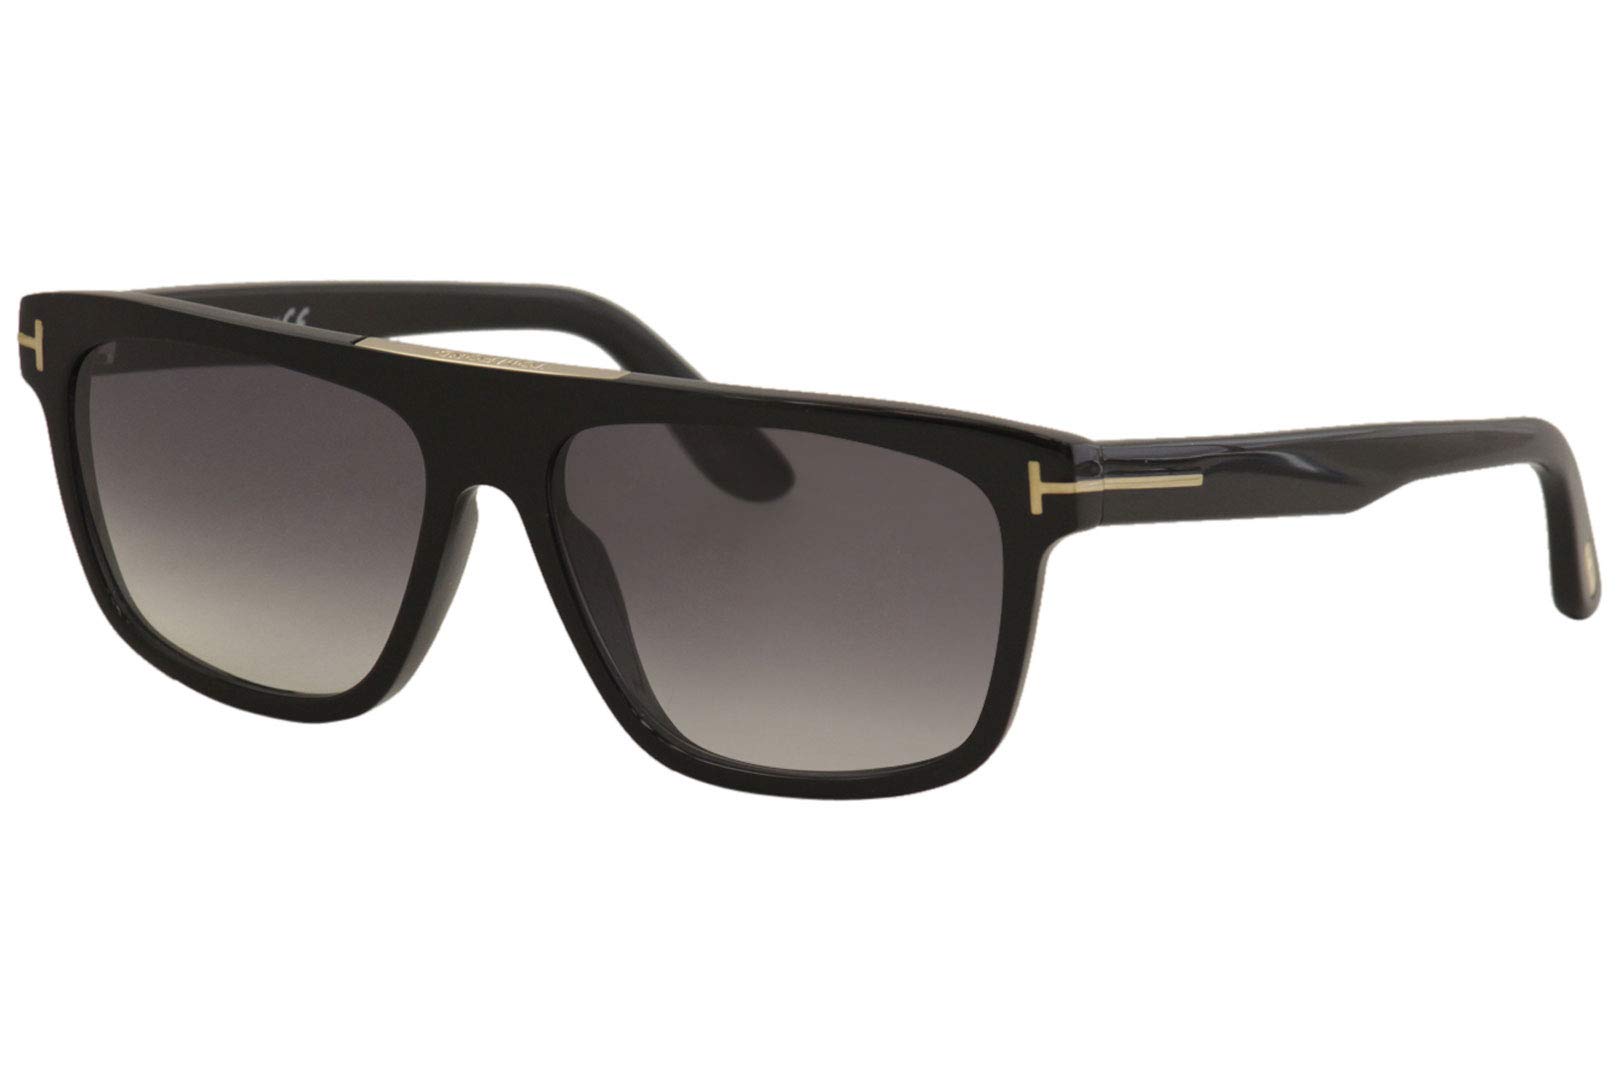 Mua Sunglasses Tom Ford FT 0628 Cecilio- 02 01B shiny black/gradient smoke,  57-15-145 trên Amazon Mỹ chính hãng 2023 | Fado